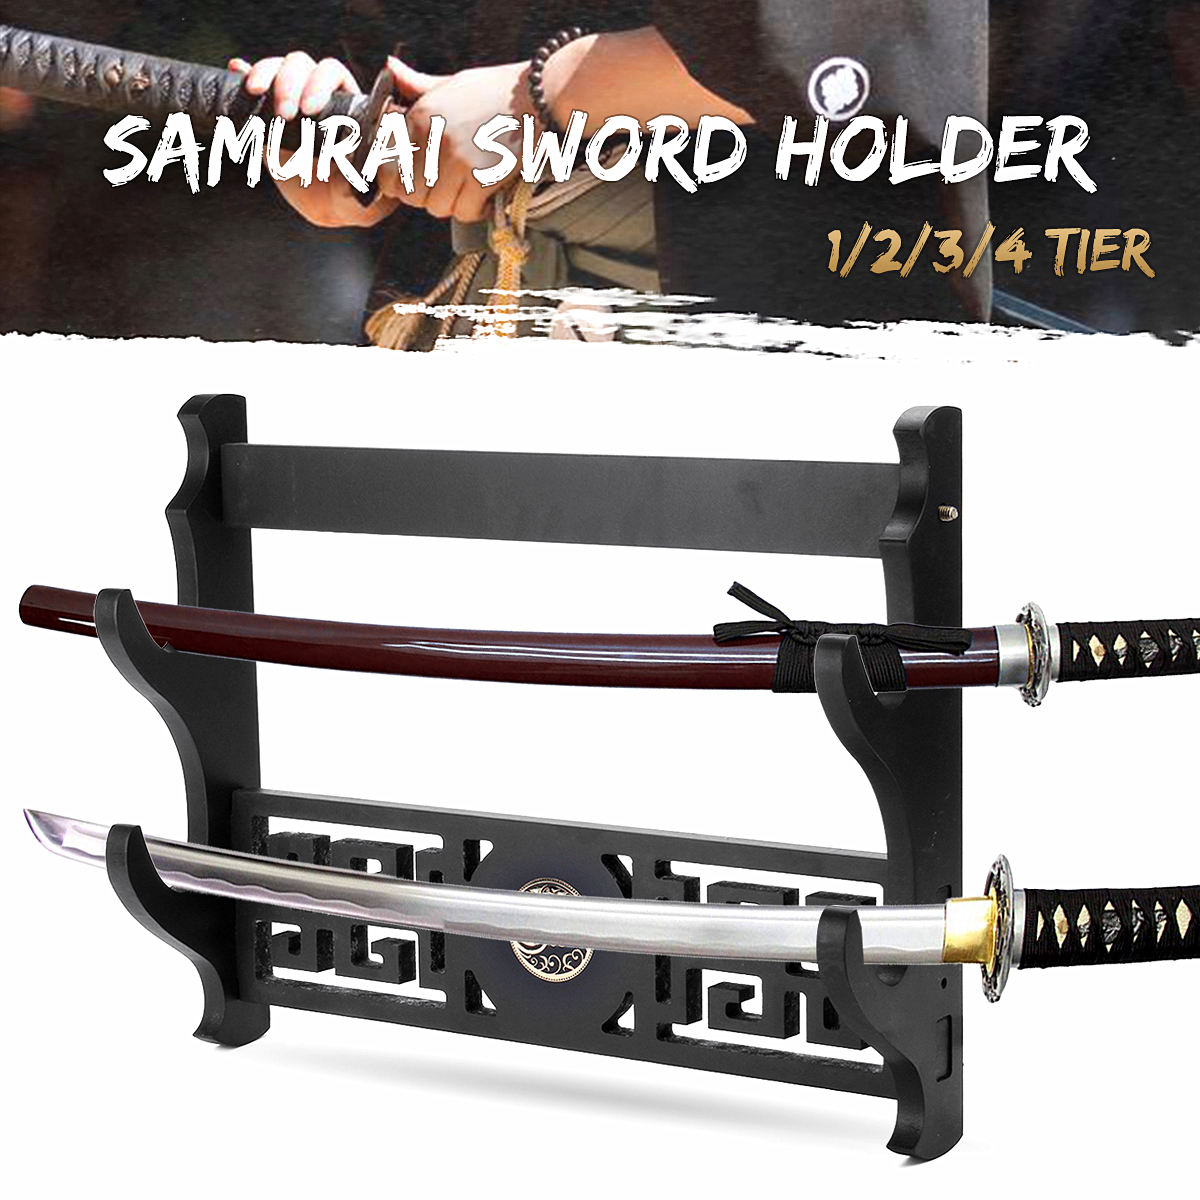 1-6 Tier Sword Holder Wall Mount Samurai Stand Display Katana Wall Hanger Rack 